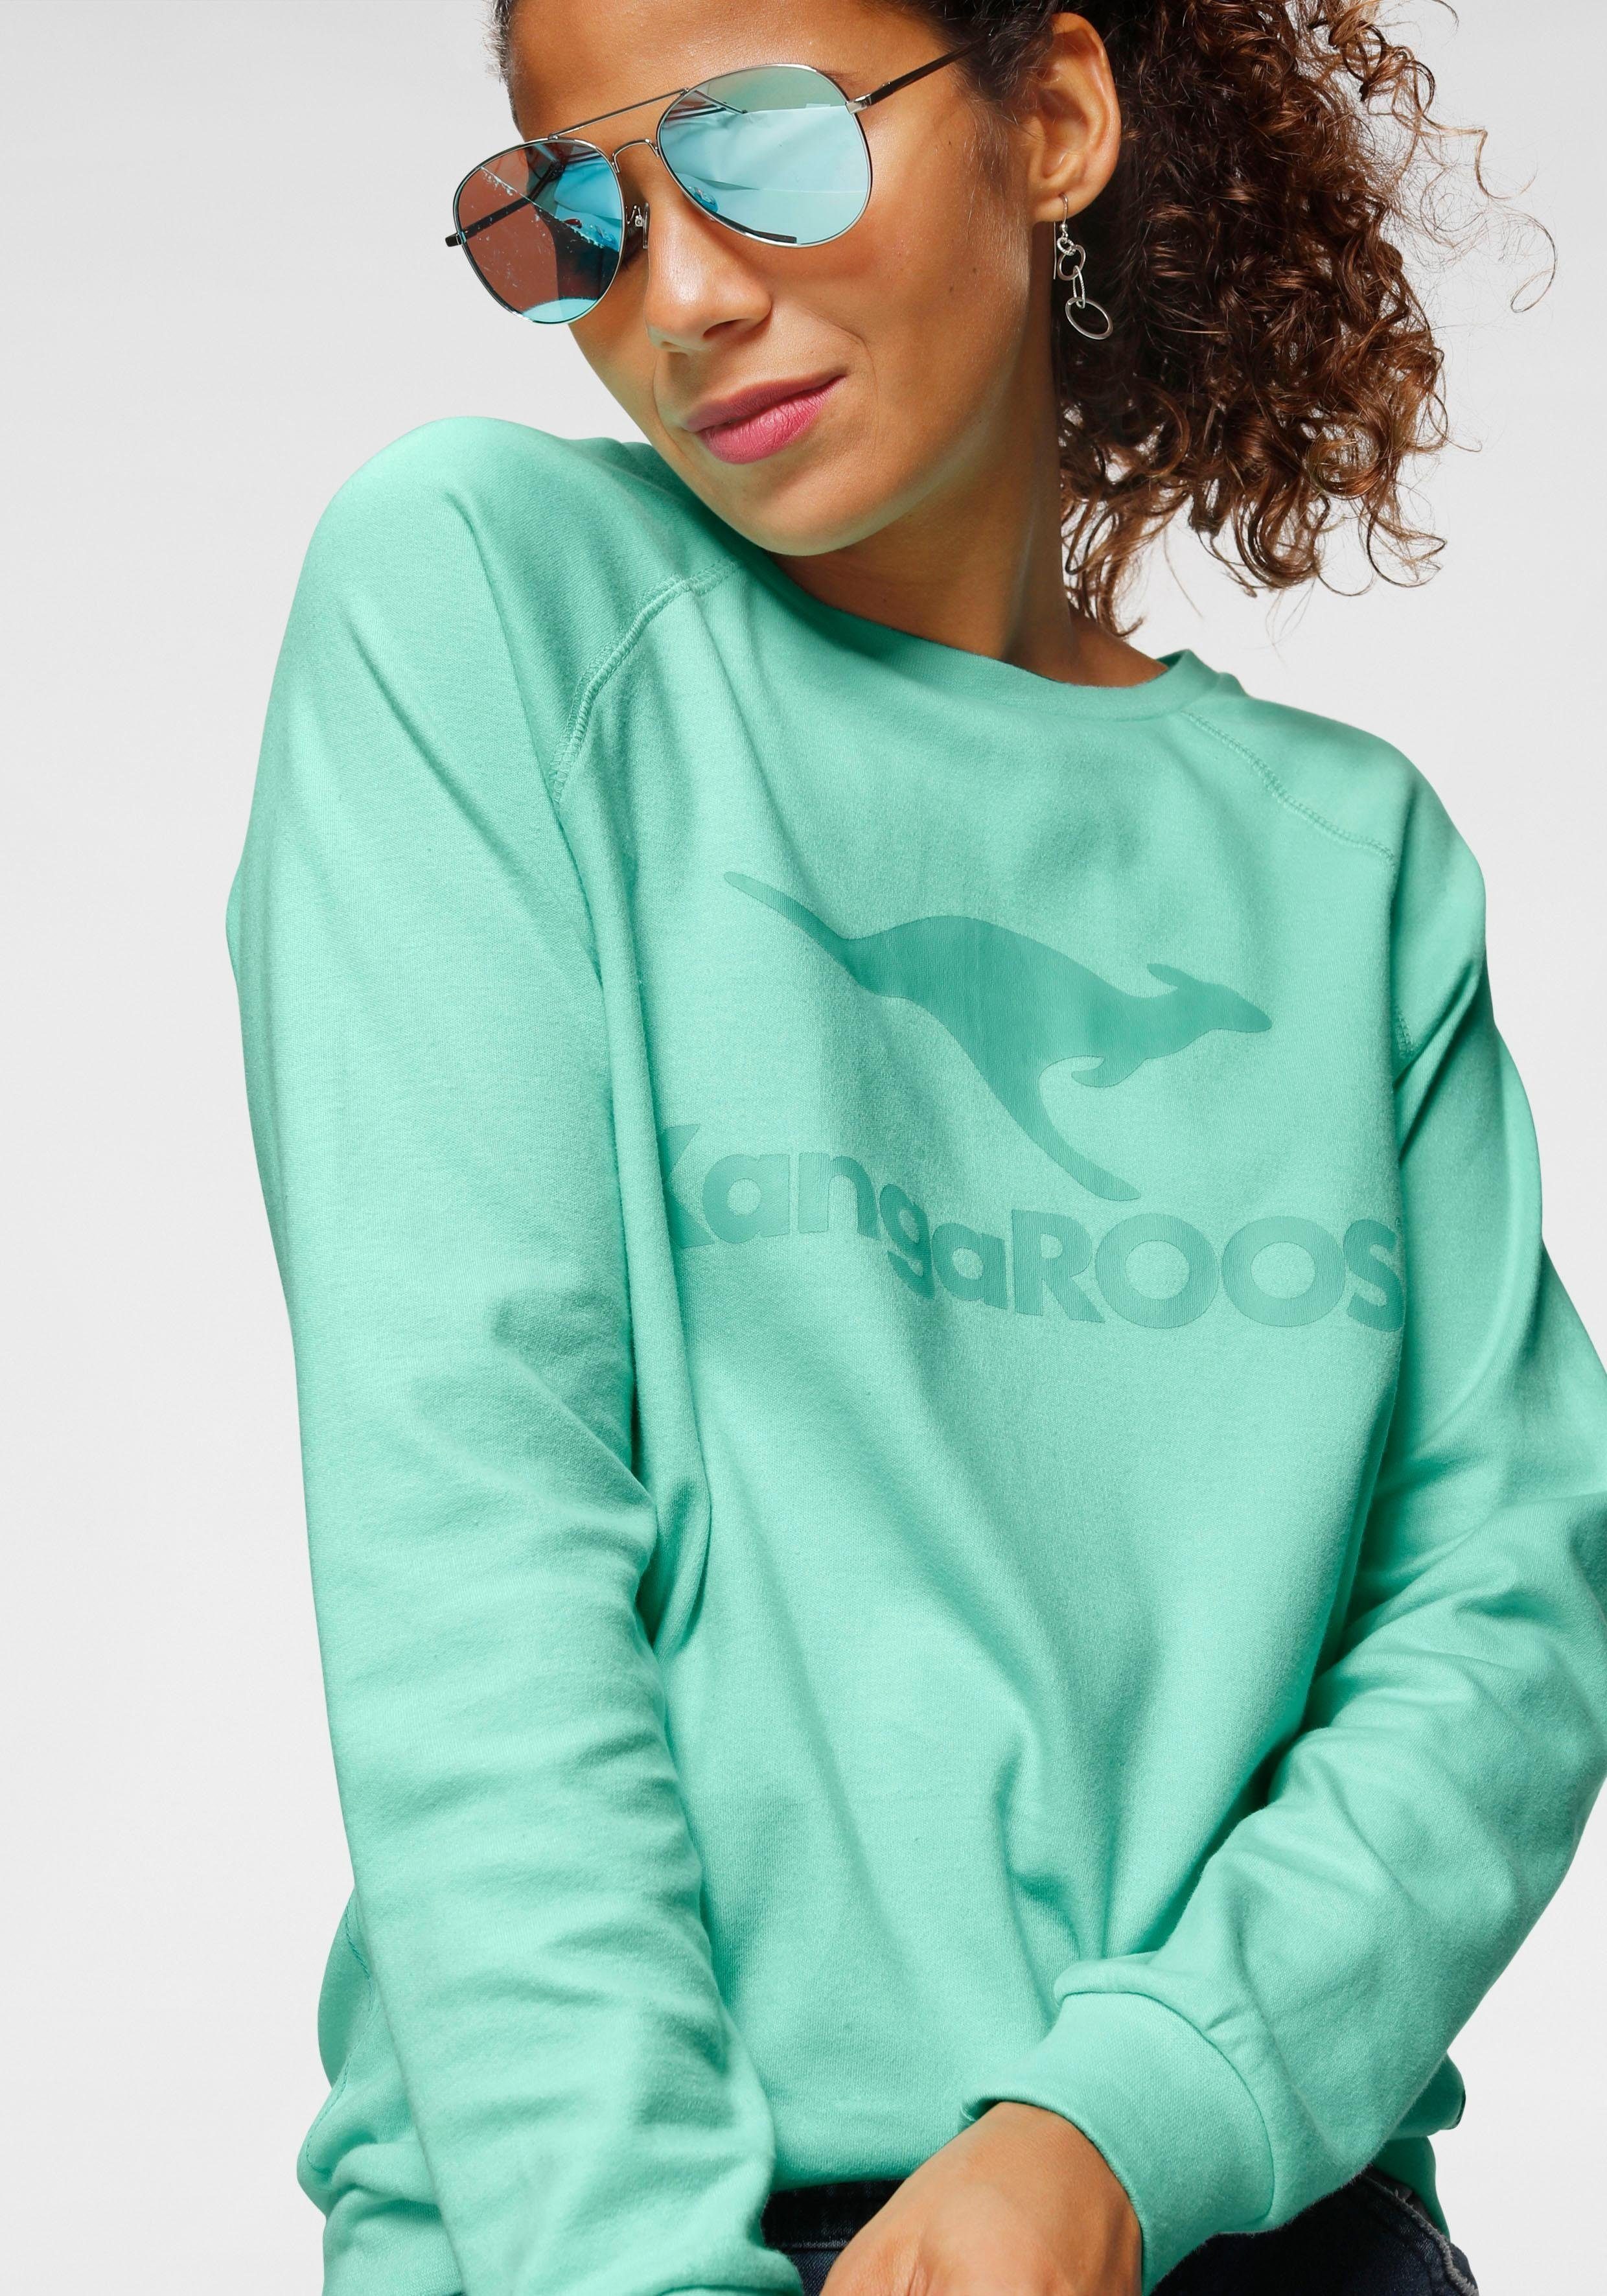 Label-Print KangaROOS Sweater großem pastell-grün mit vorne